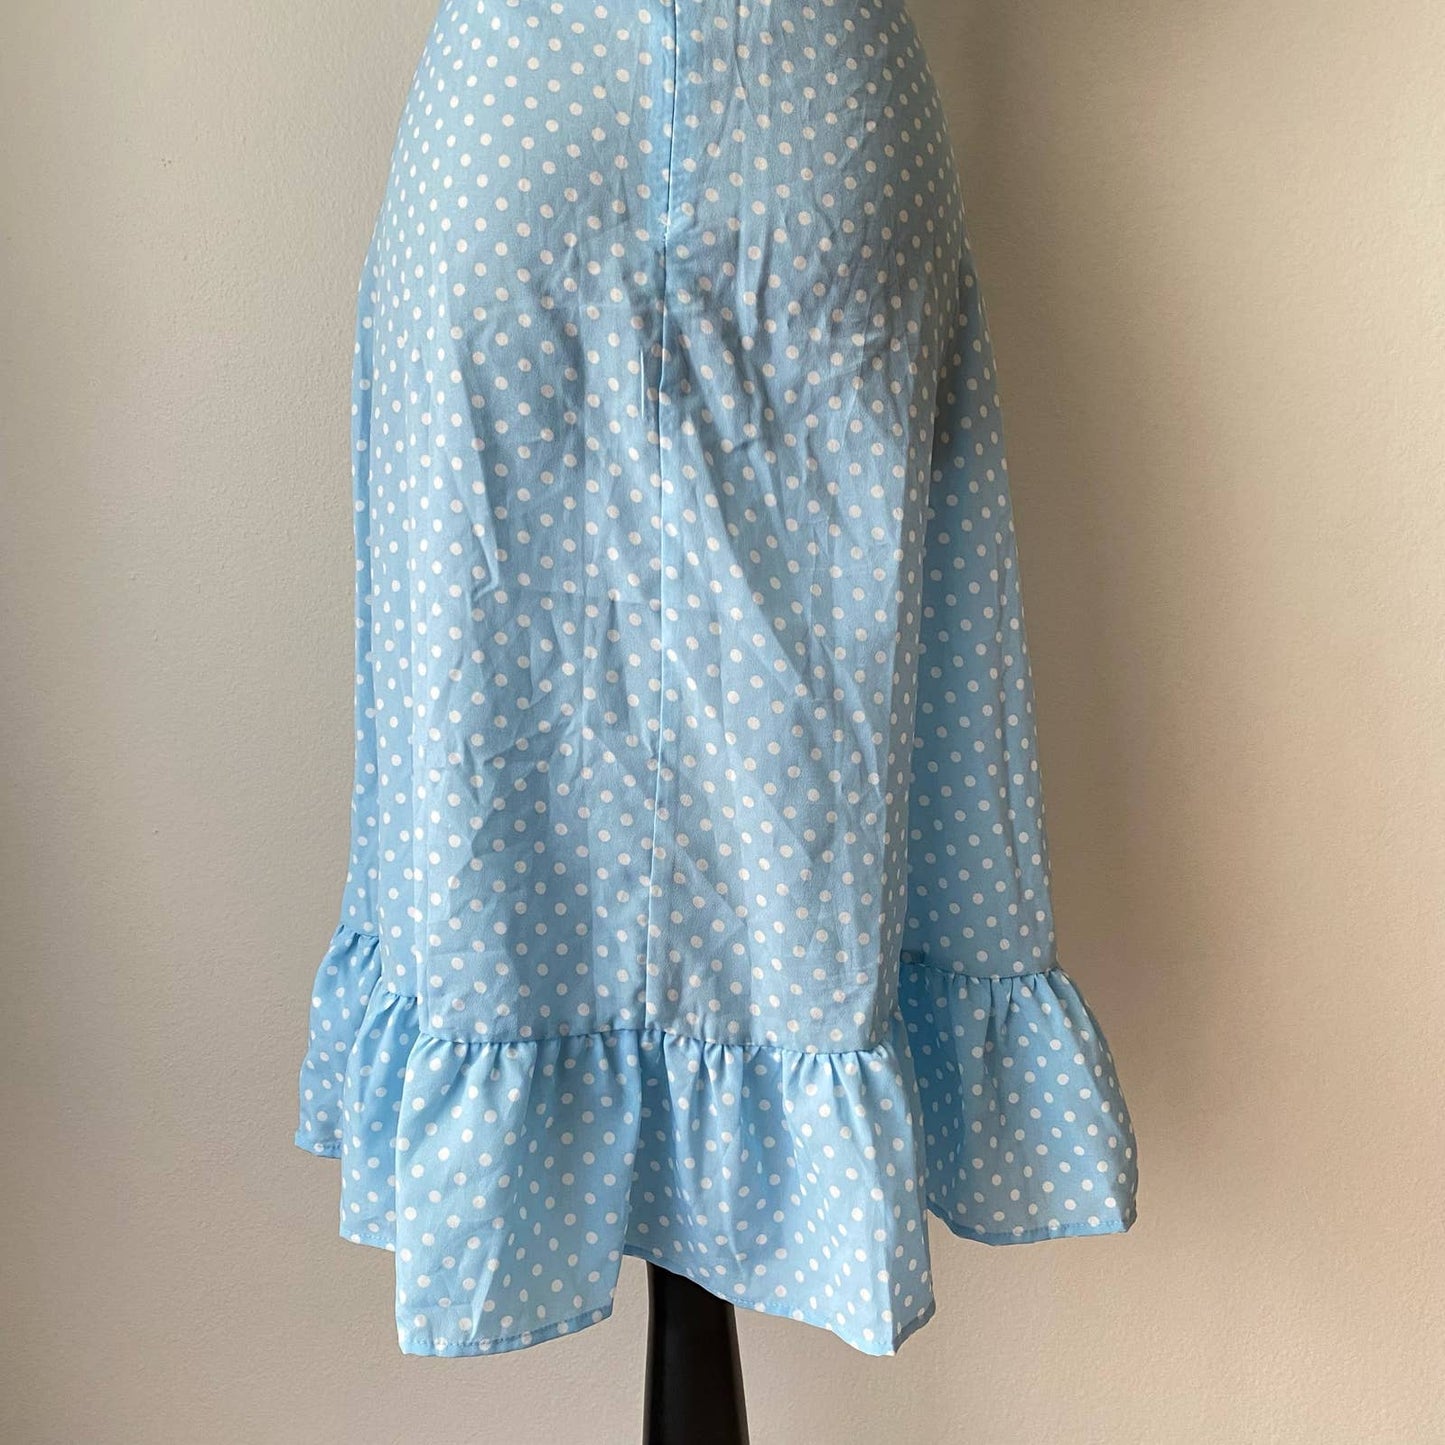 Boohoo sz 8 polkadot 90's inspired vintage midi dress NWT